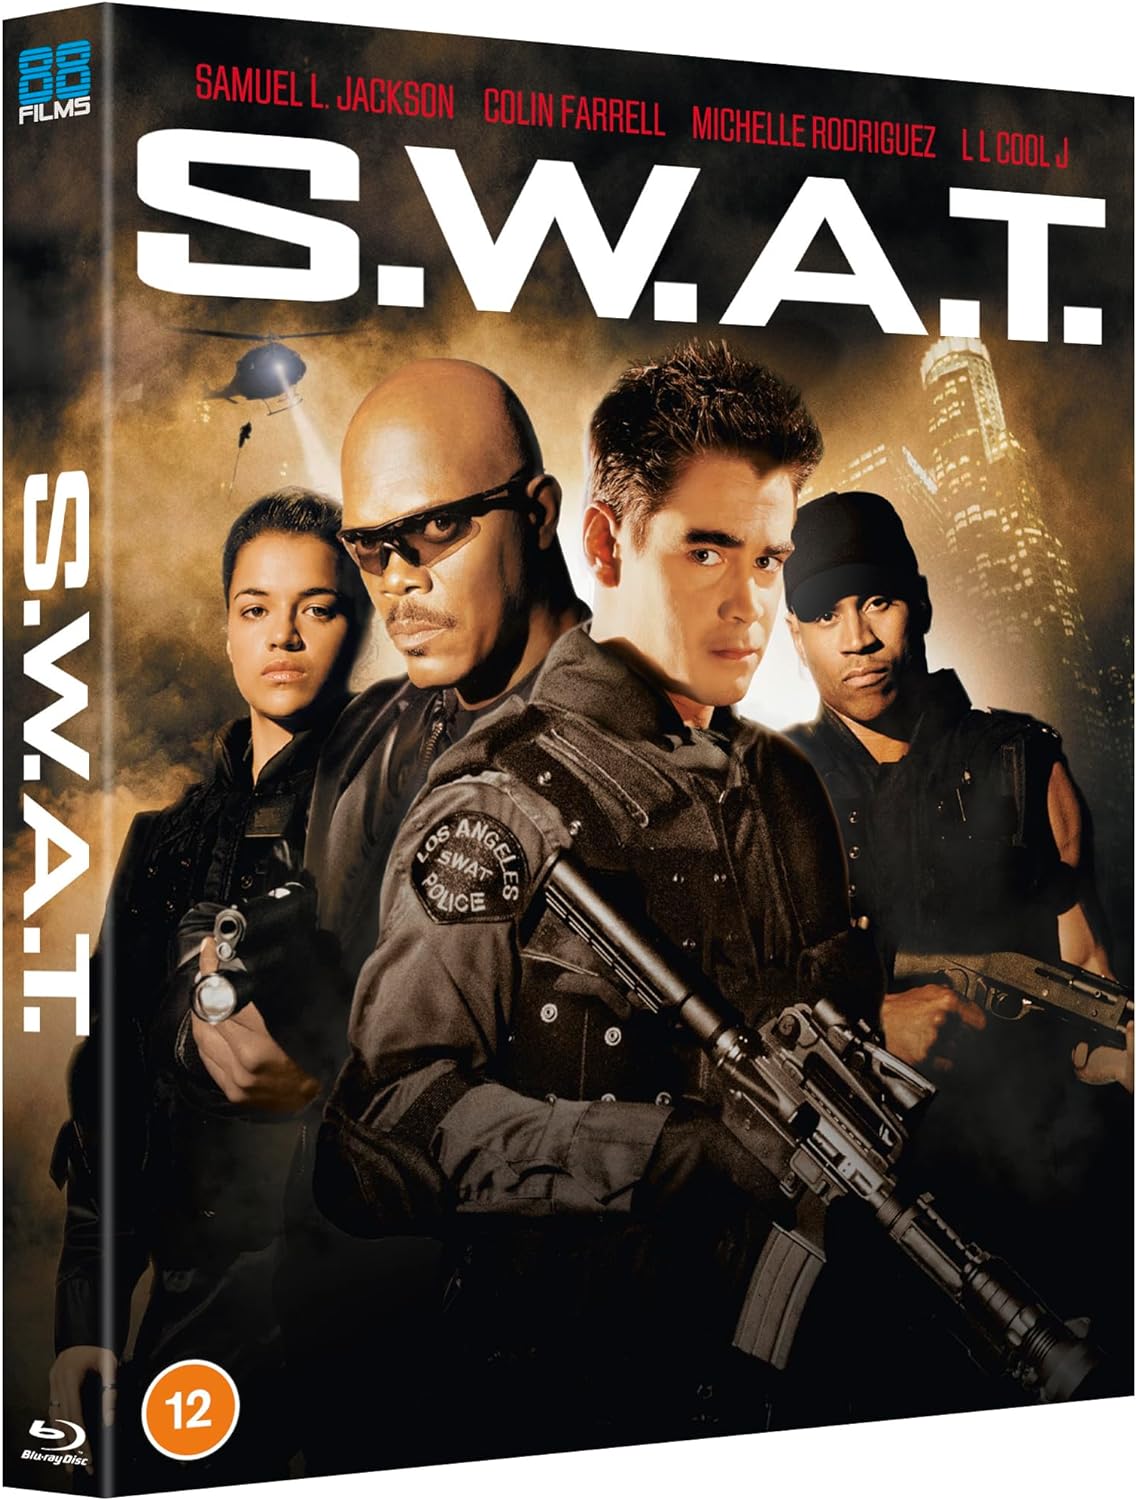 S.W.A.T. Blu-ray with Slipcover (88 Films/Region B)